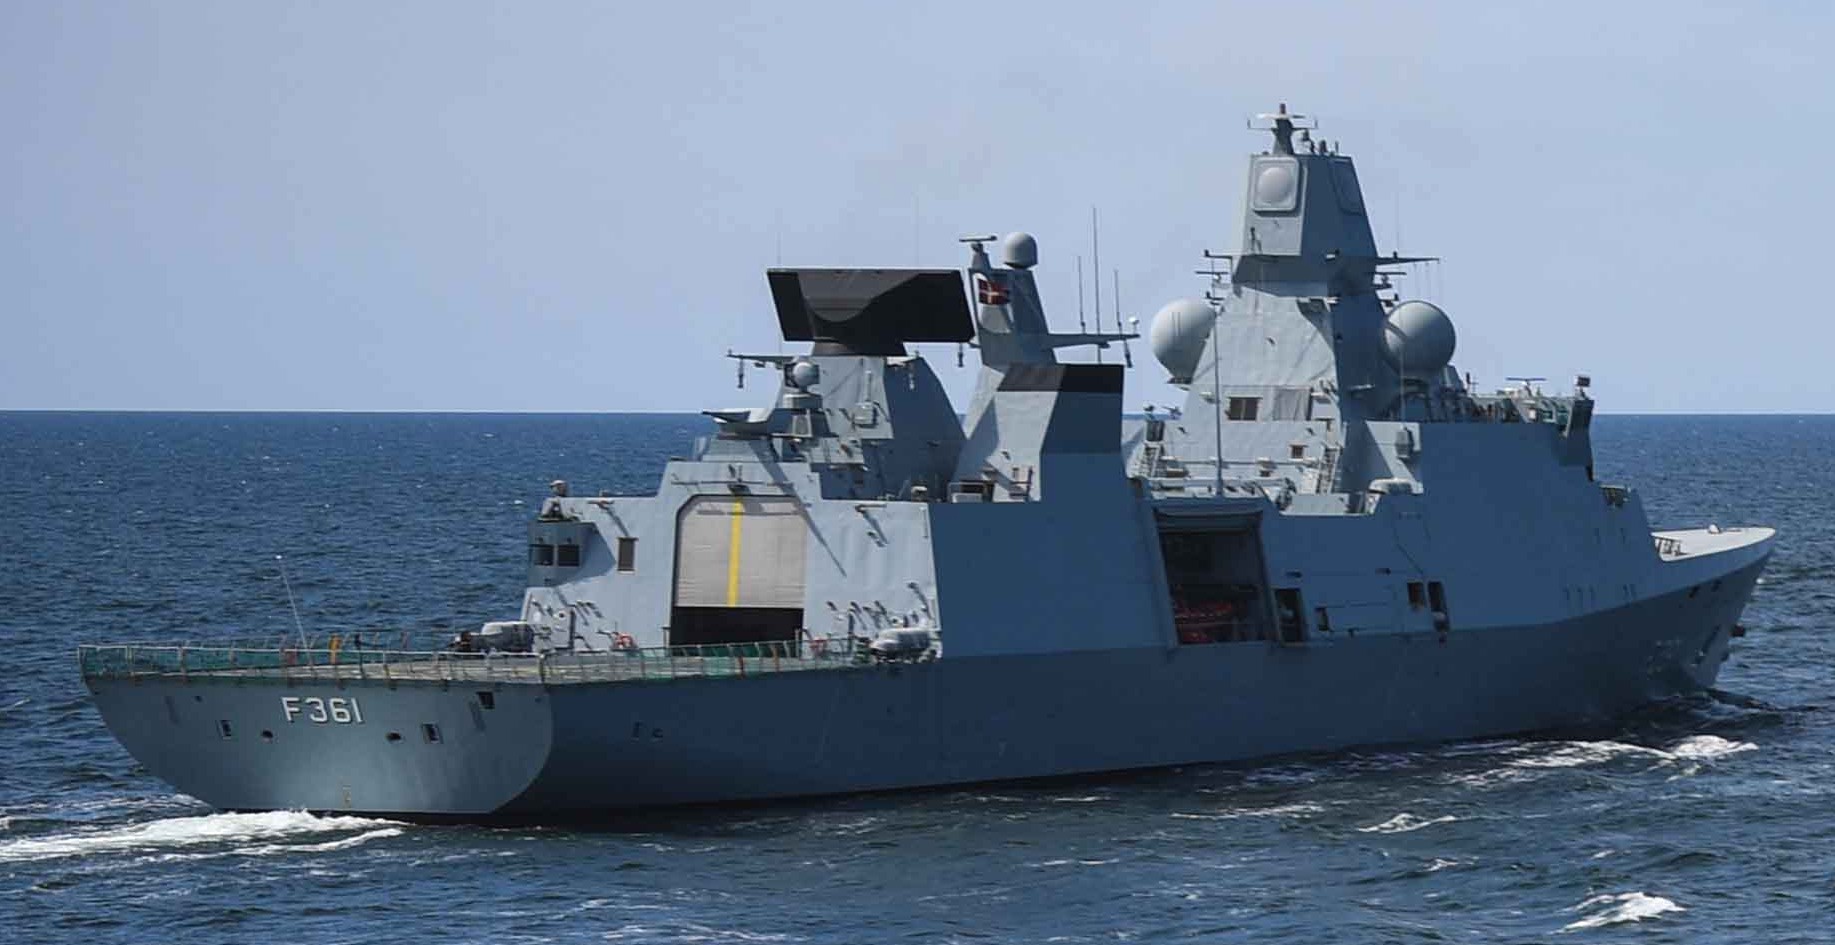 f-361 hdms iver huitfeldt class guided missile frigate ffg royal danish navy 07